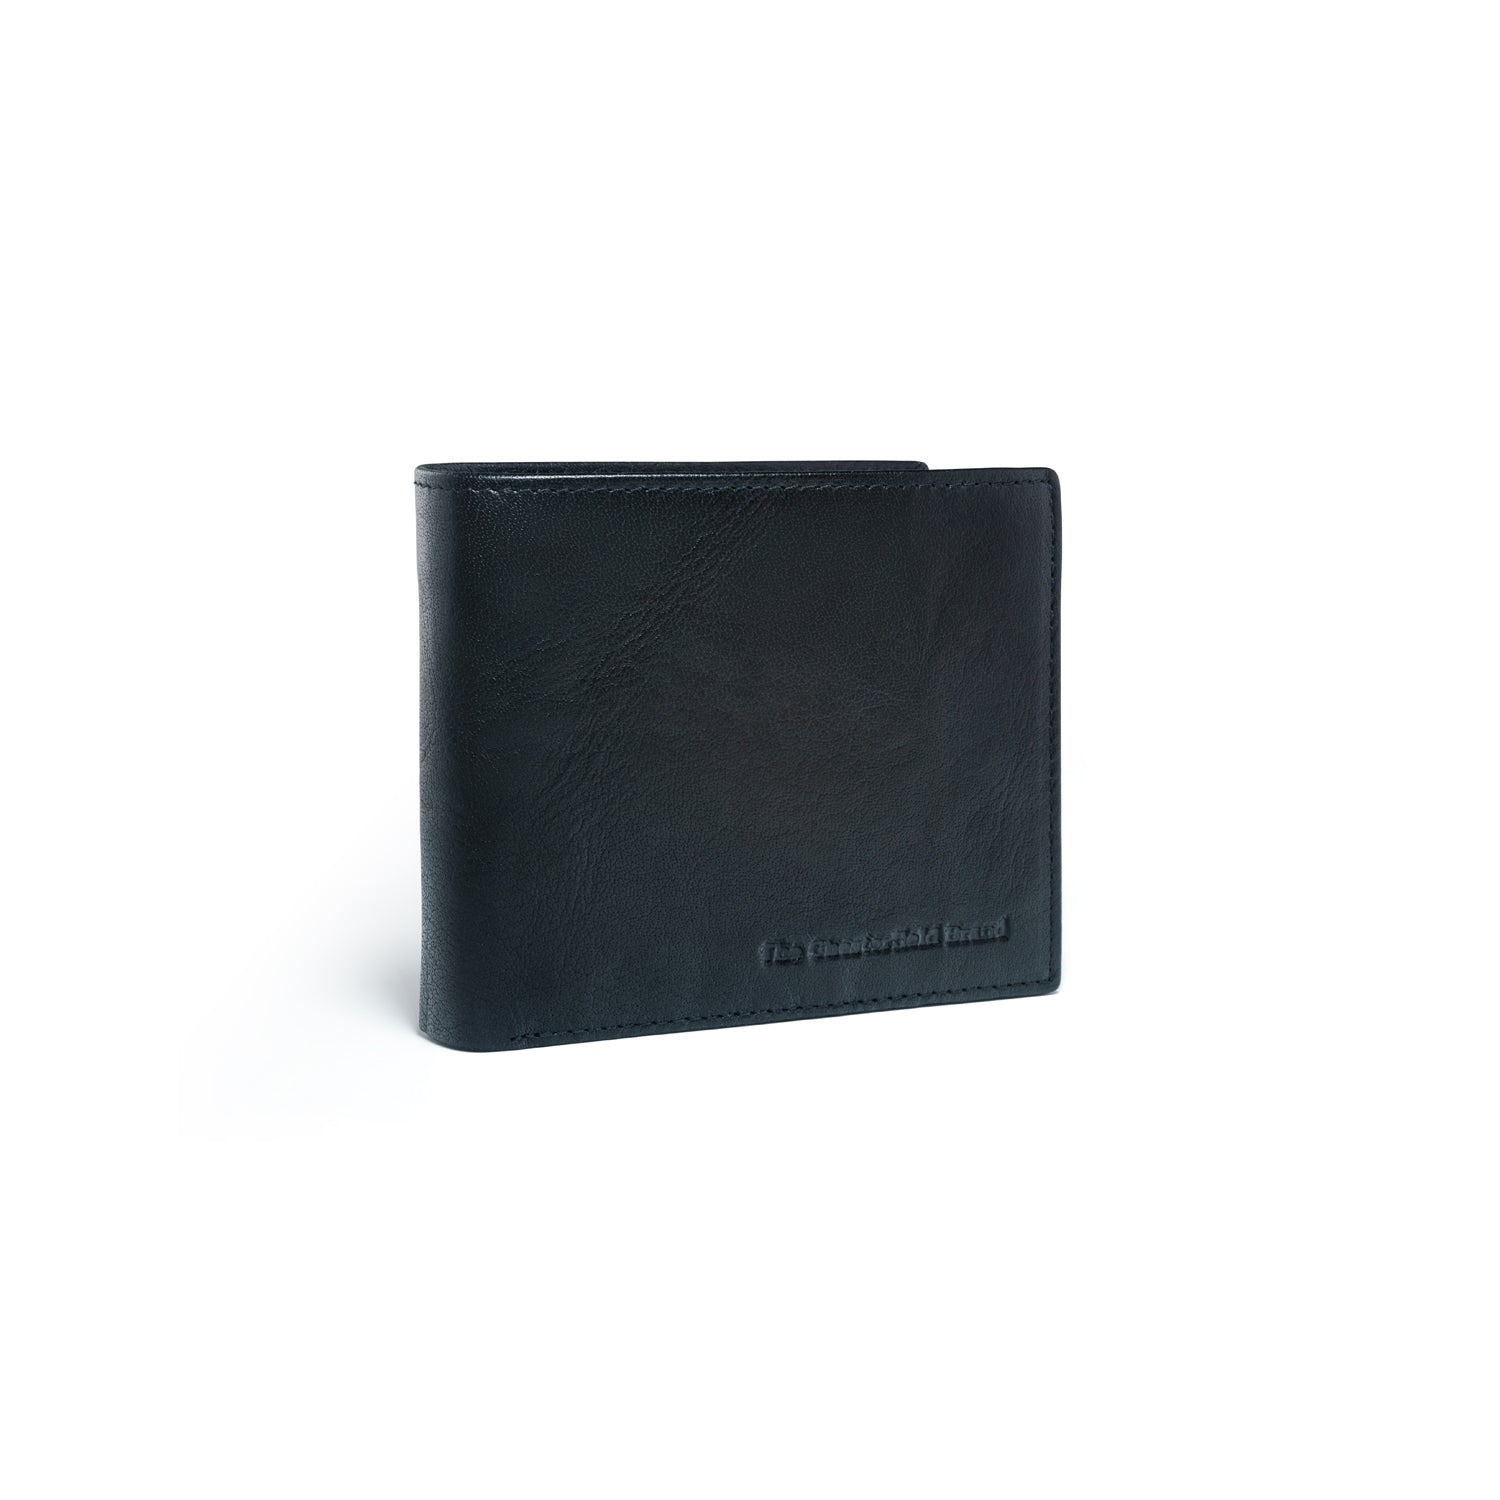 The Brand Leather Wallet – Læderhandel